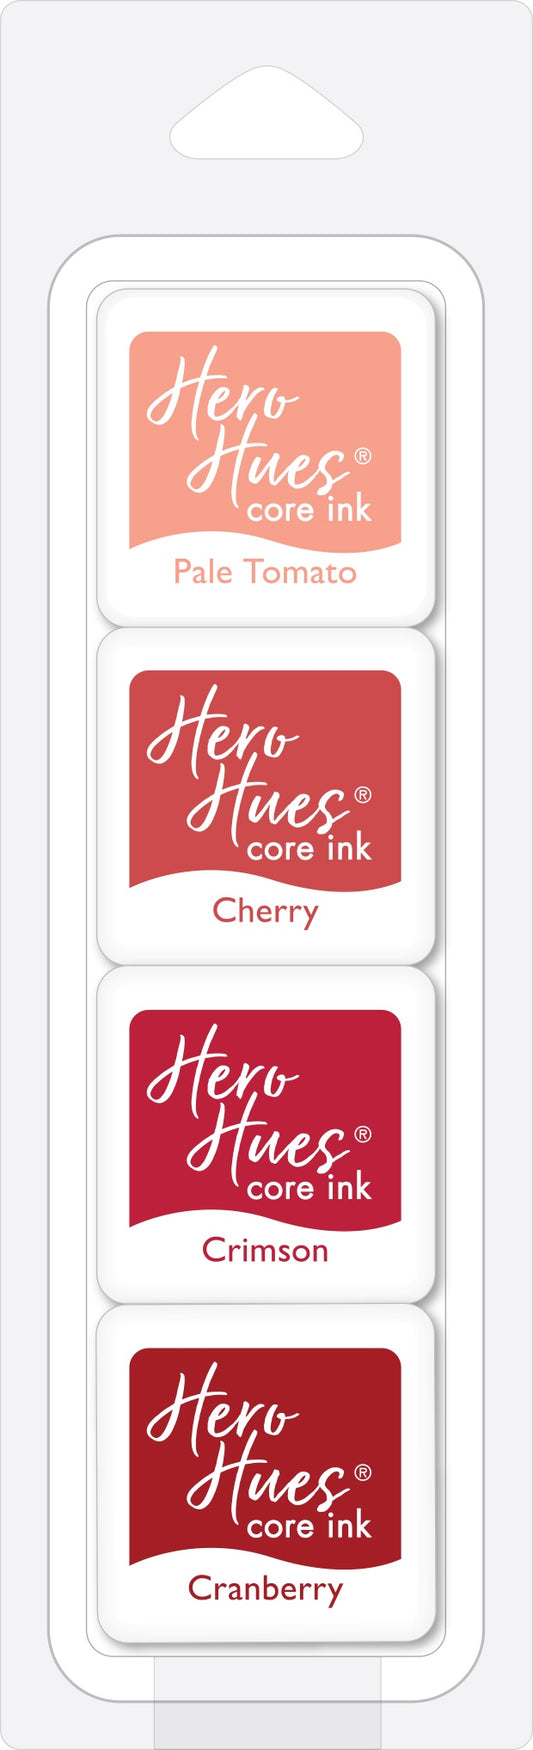 H A REDS CORE INK CUBES